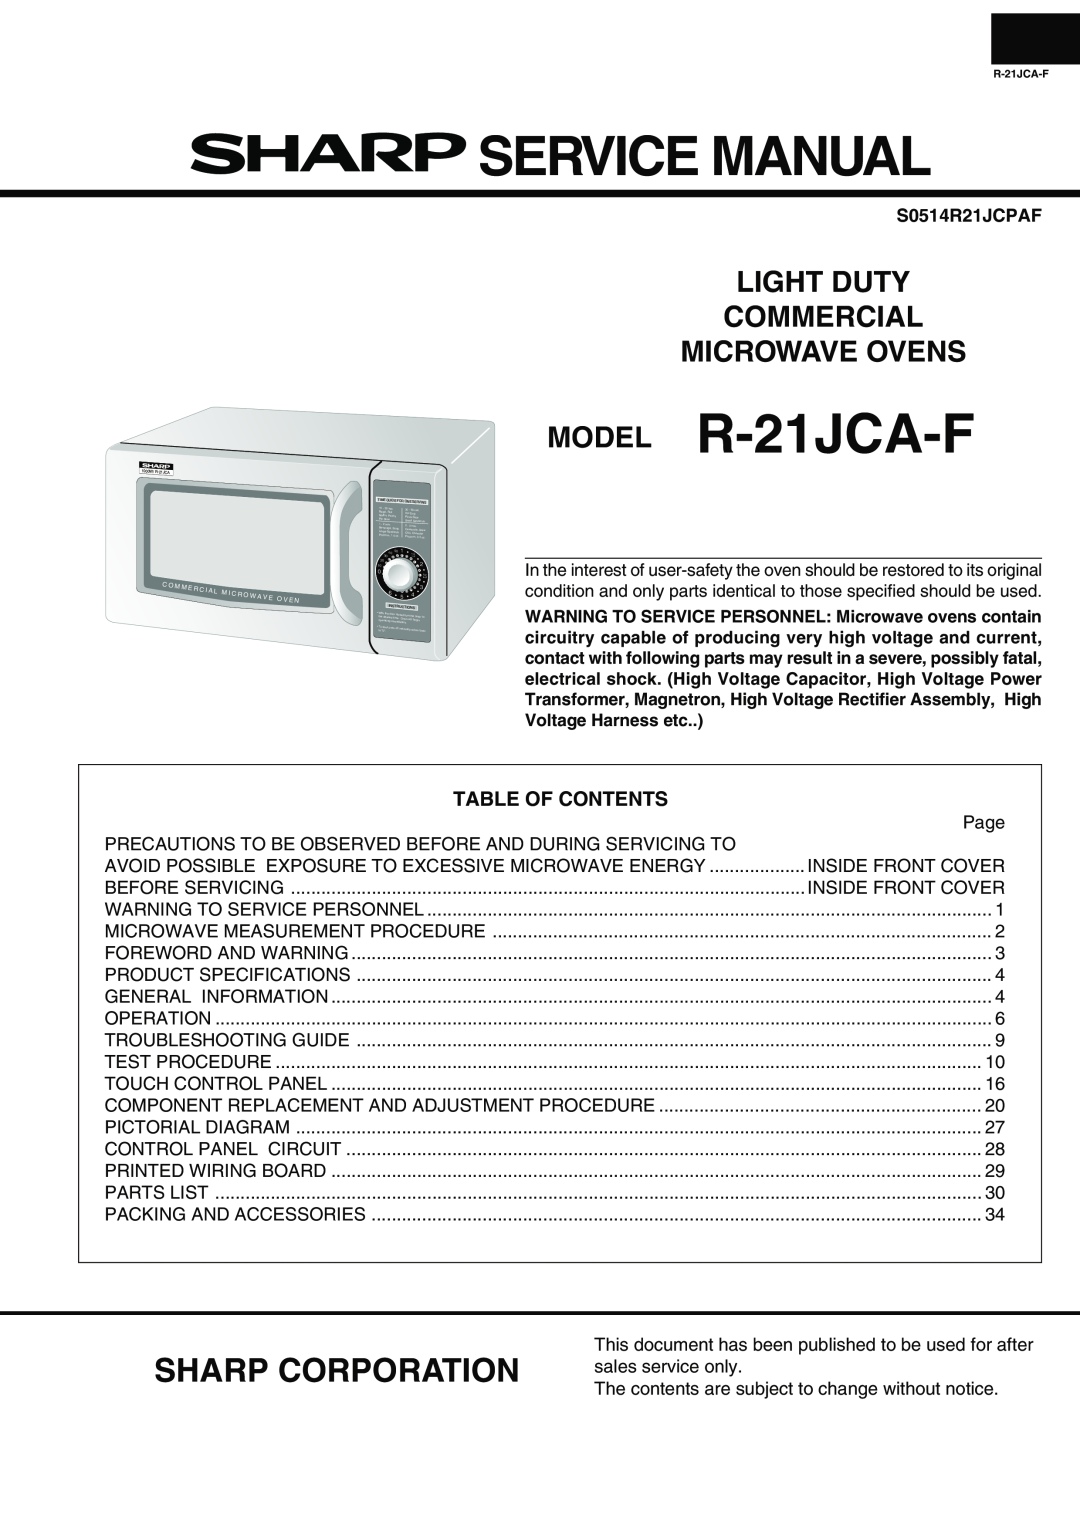 Sharp service manual Sharp Corporation, Service Manual, MODEL R-21JCA-F, Light Duty Commercial Microwave Ovens 